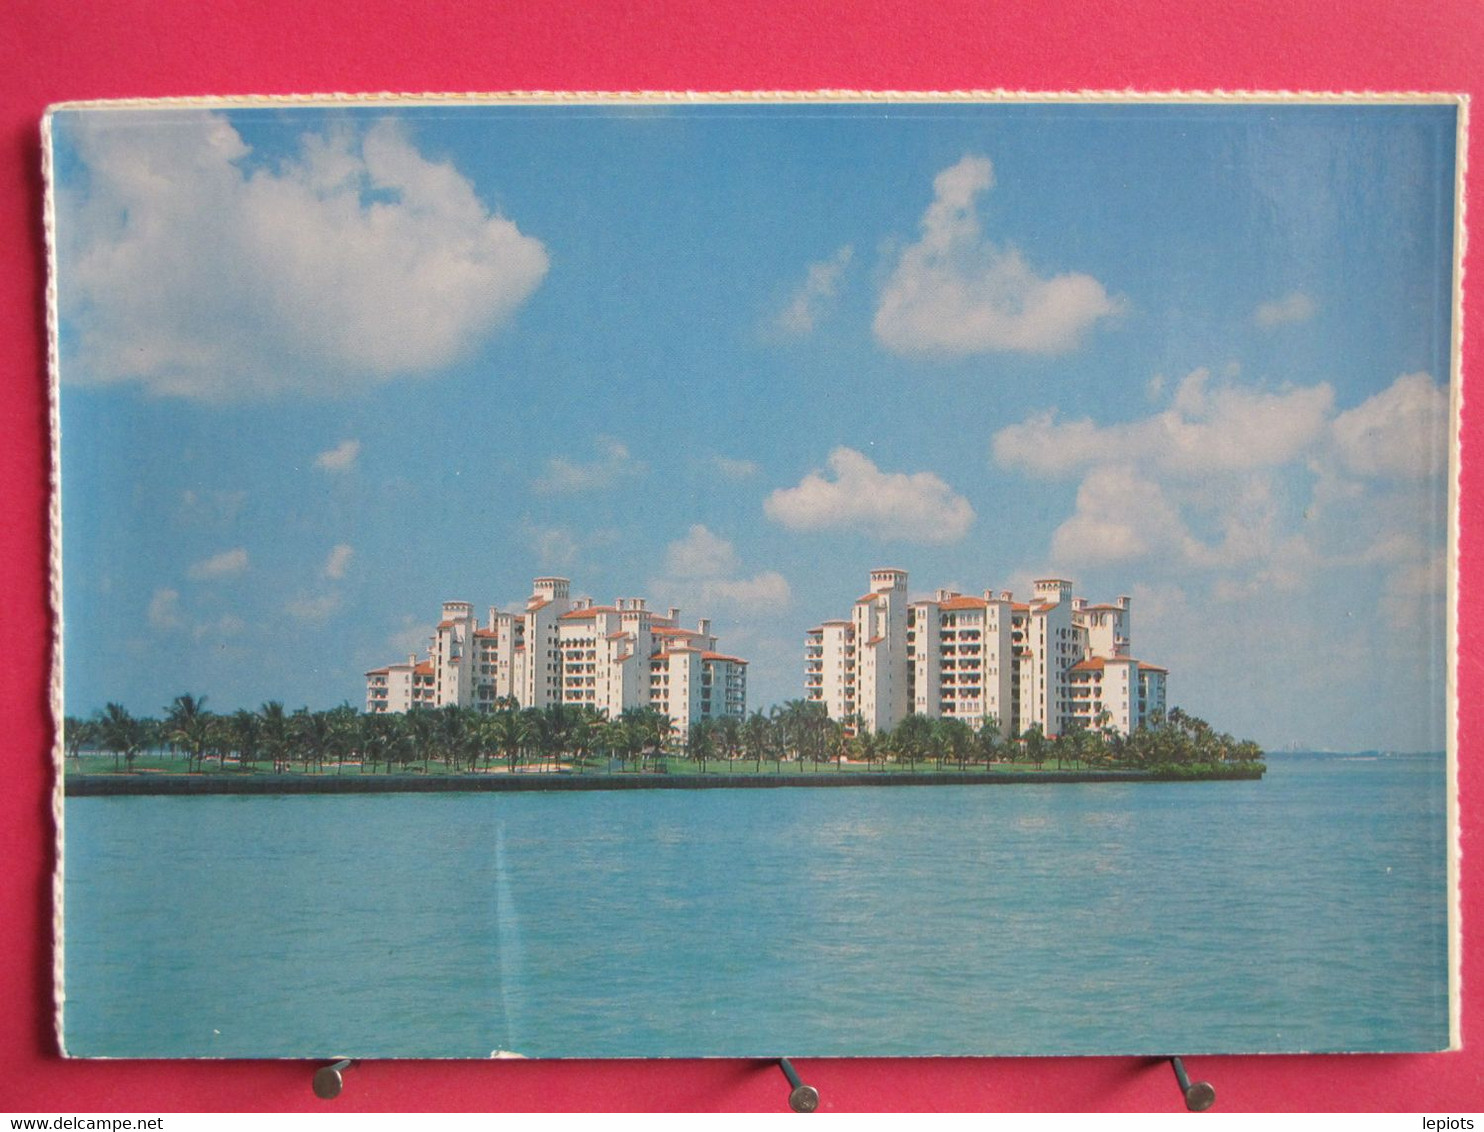 Visuel Très Peu Courant - Etats-Unis - Miami - Lifestyles Of The Rich And Famous Fischer Island - R/verso - Miami